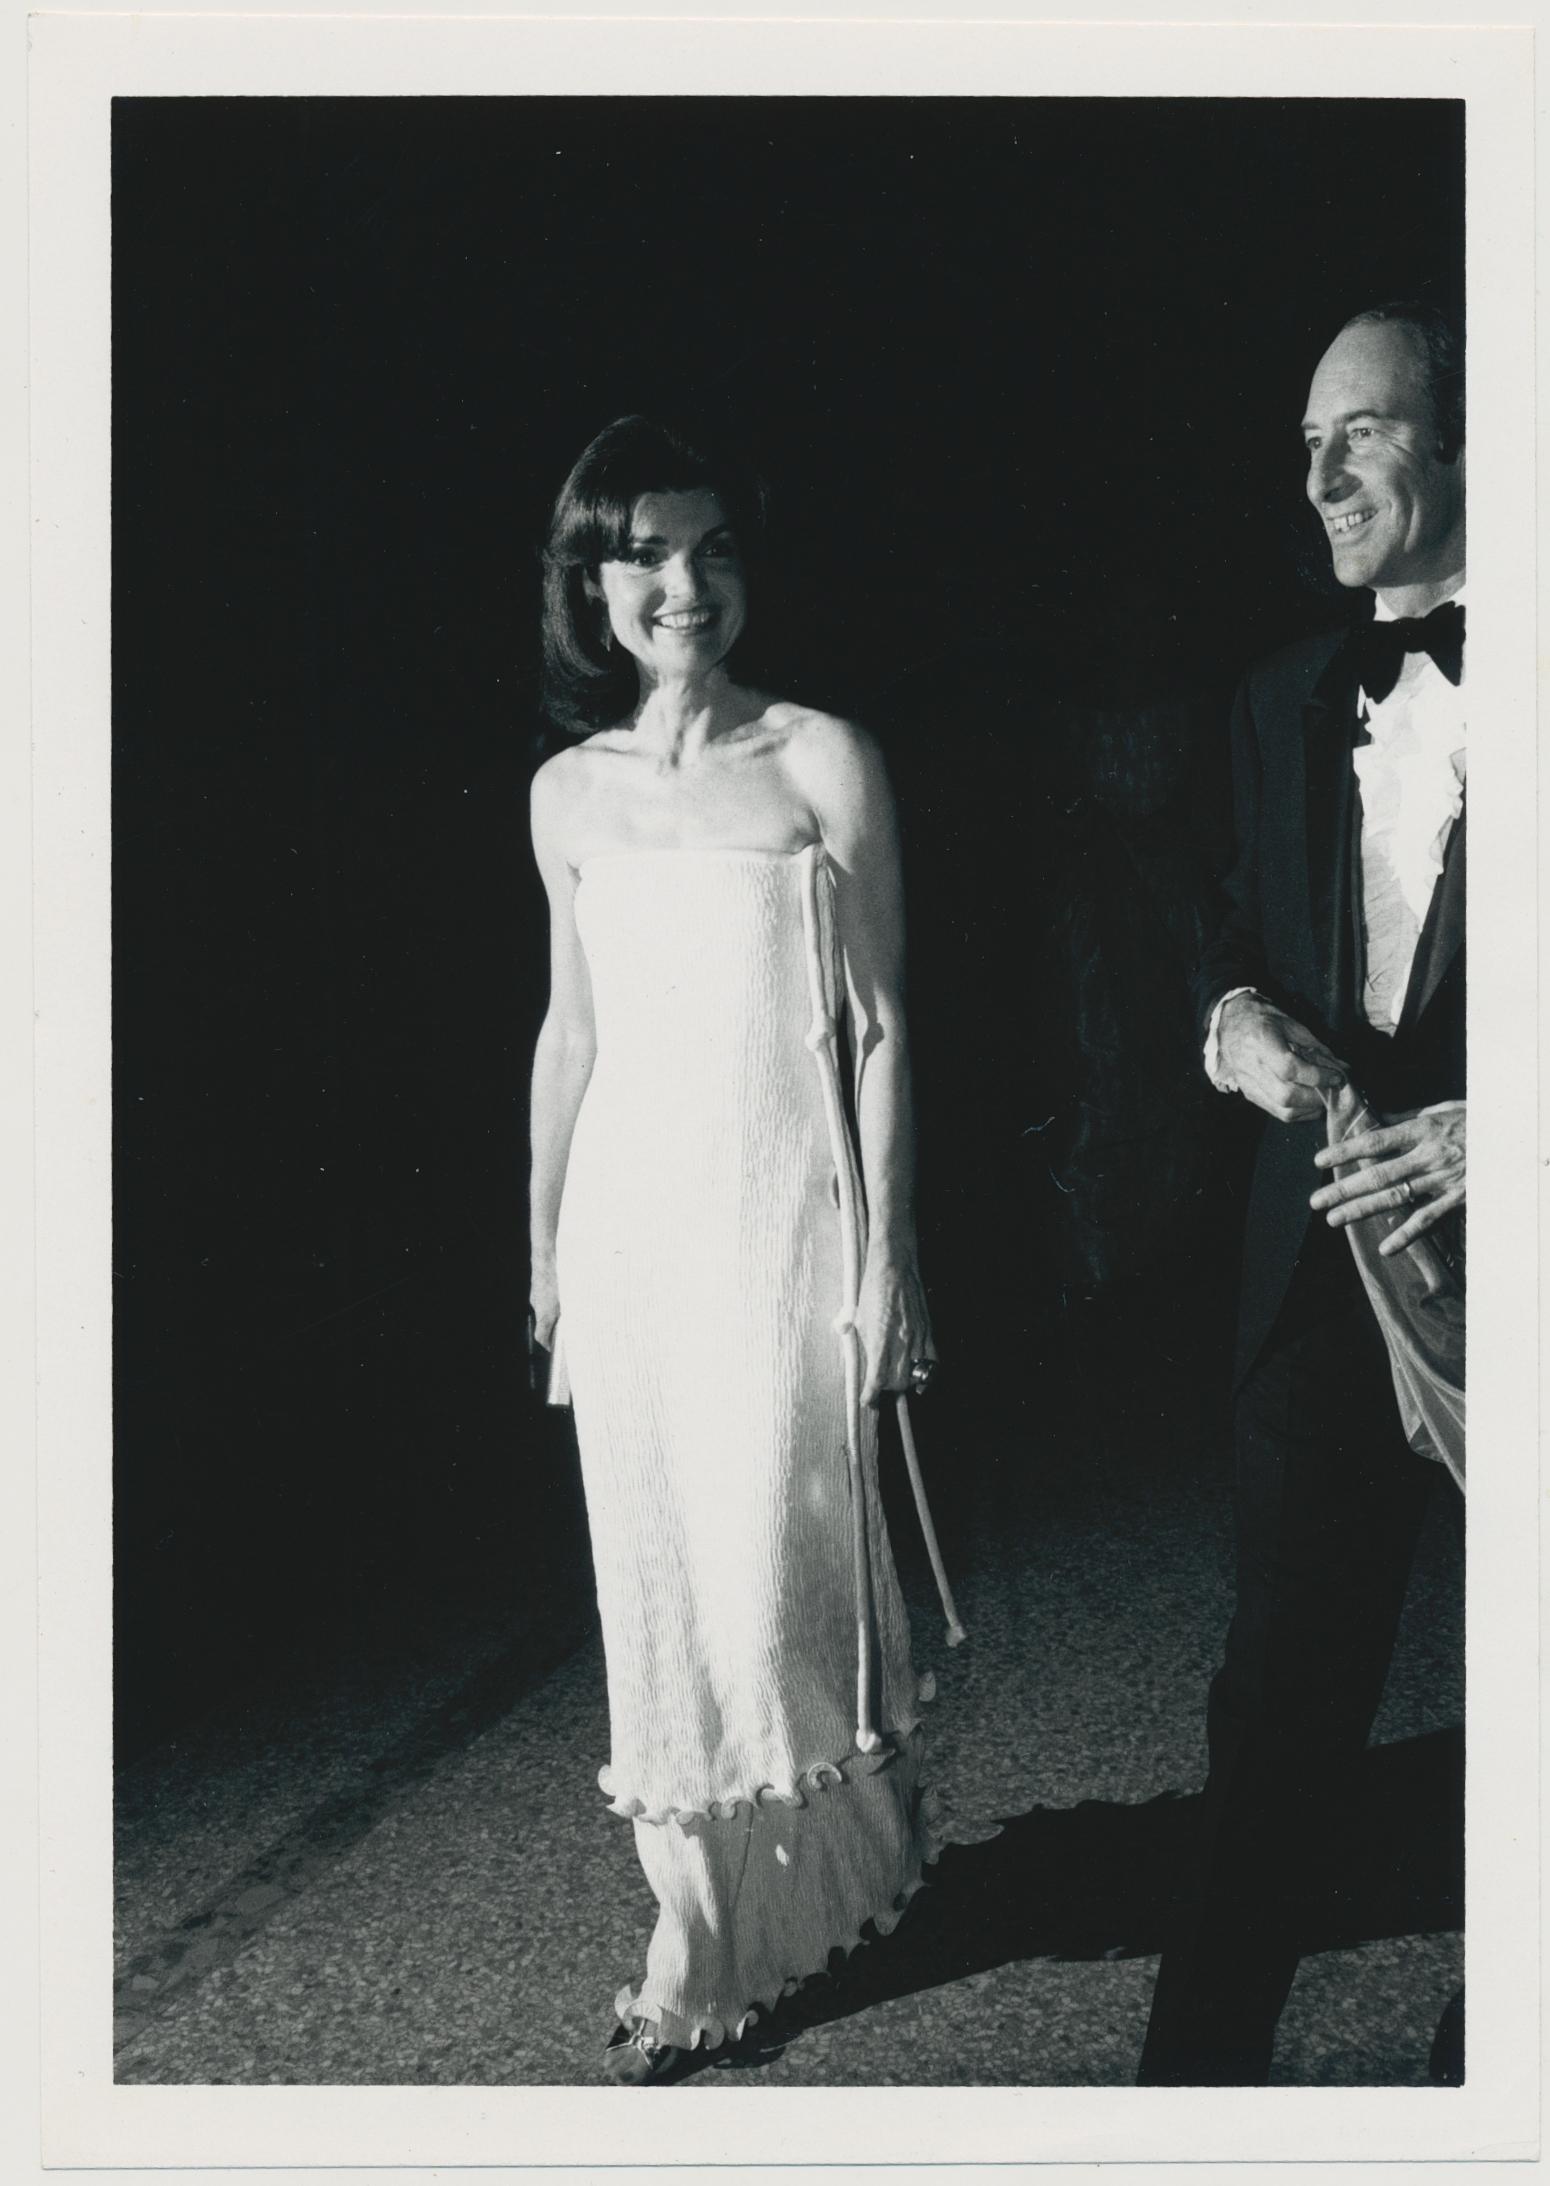 Jackie Kennedy, Thomas Hoving, Black and White, MET, USA, 1976, 18, 1 x 12, 7 cm - Art by Oscar Abolafia